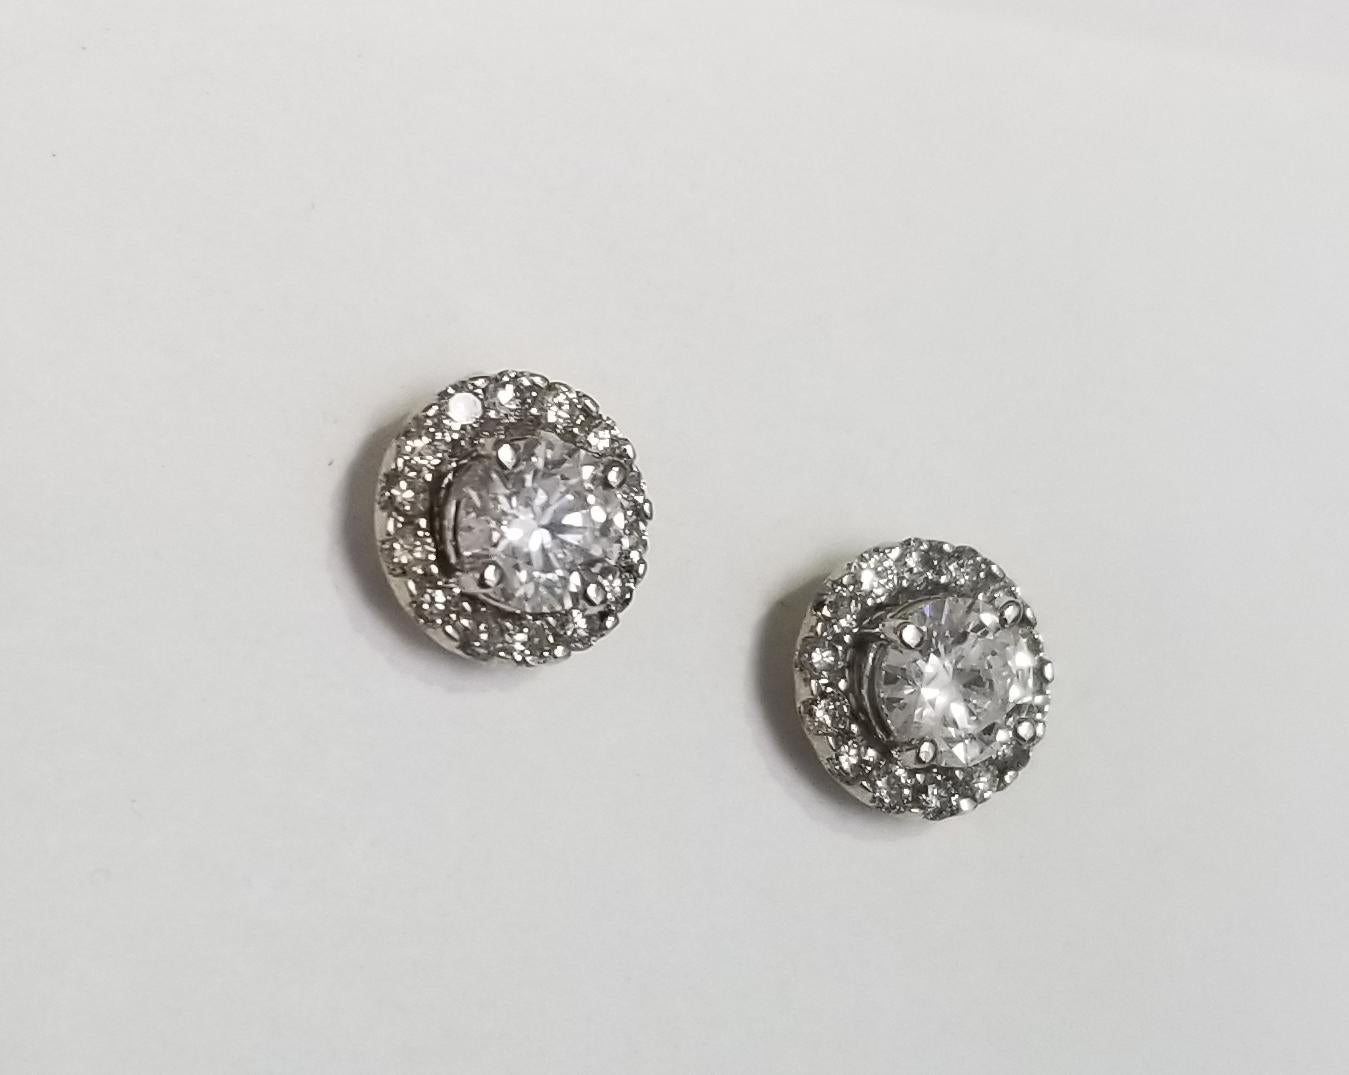 14k white gold 1.23ct.s diamonds stud earrings, containing 2 brilliant cut diamonds; color 